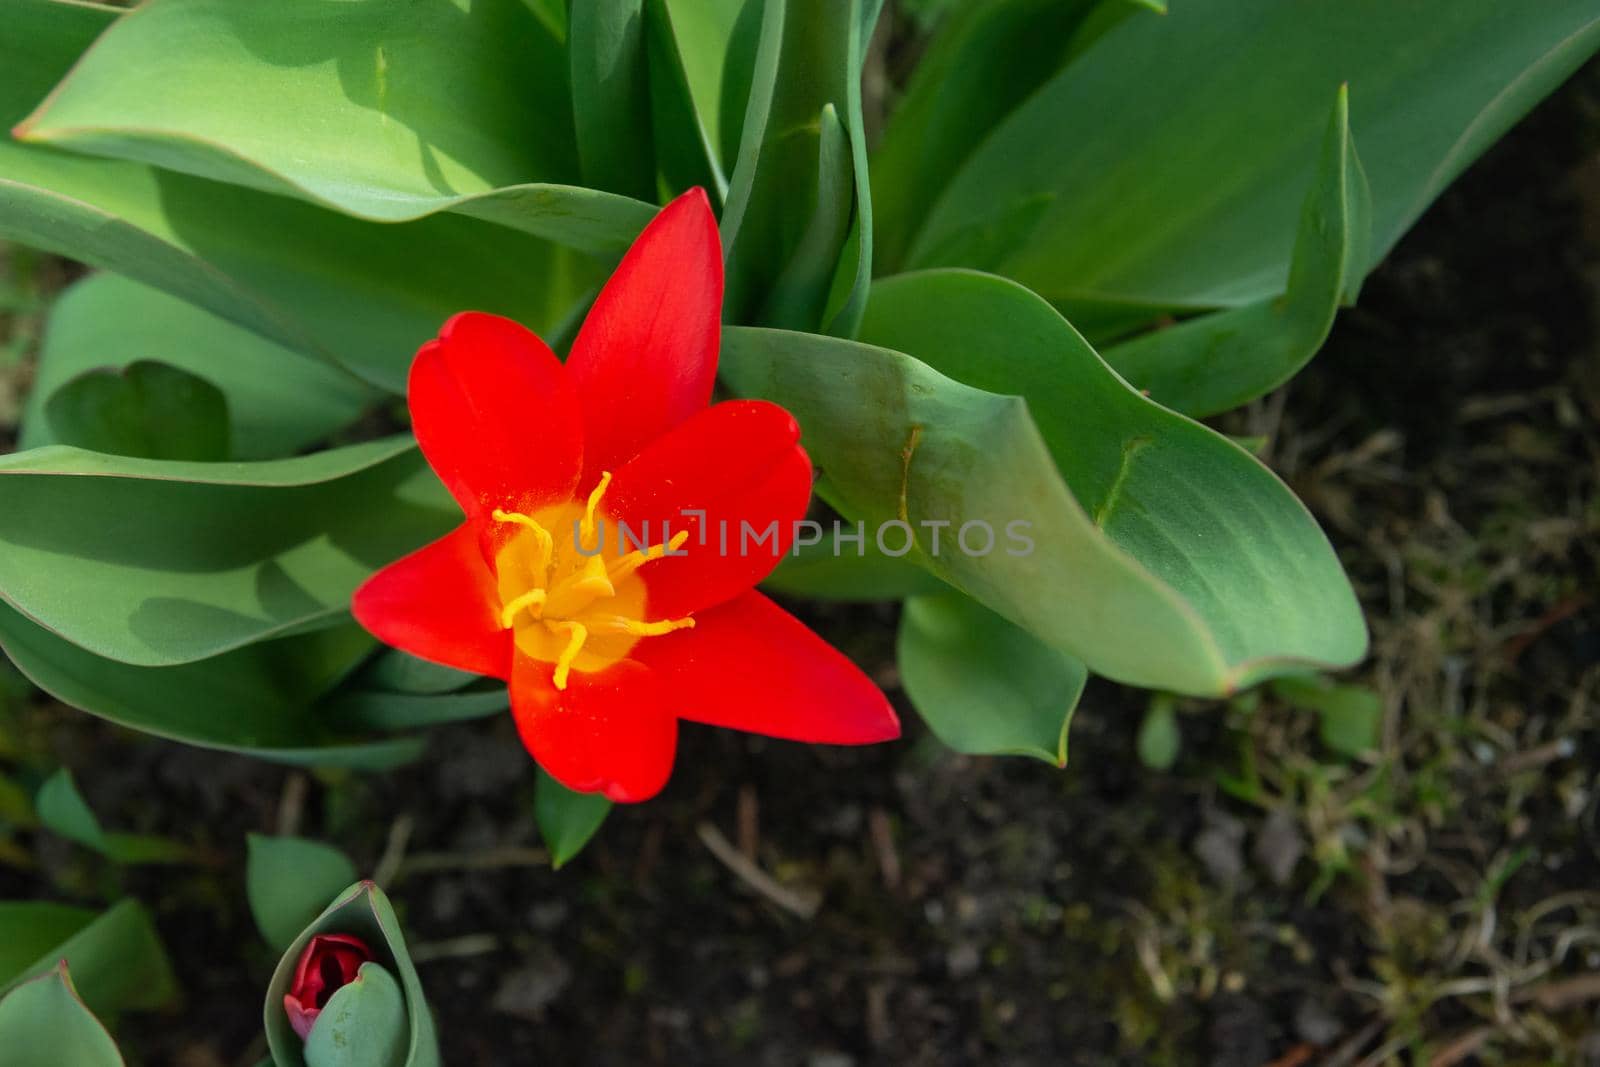 Red tulip with open petals, top view of the flower, garden bloom